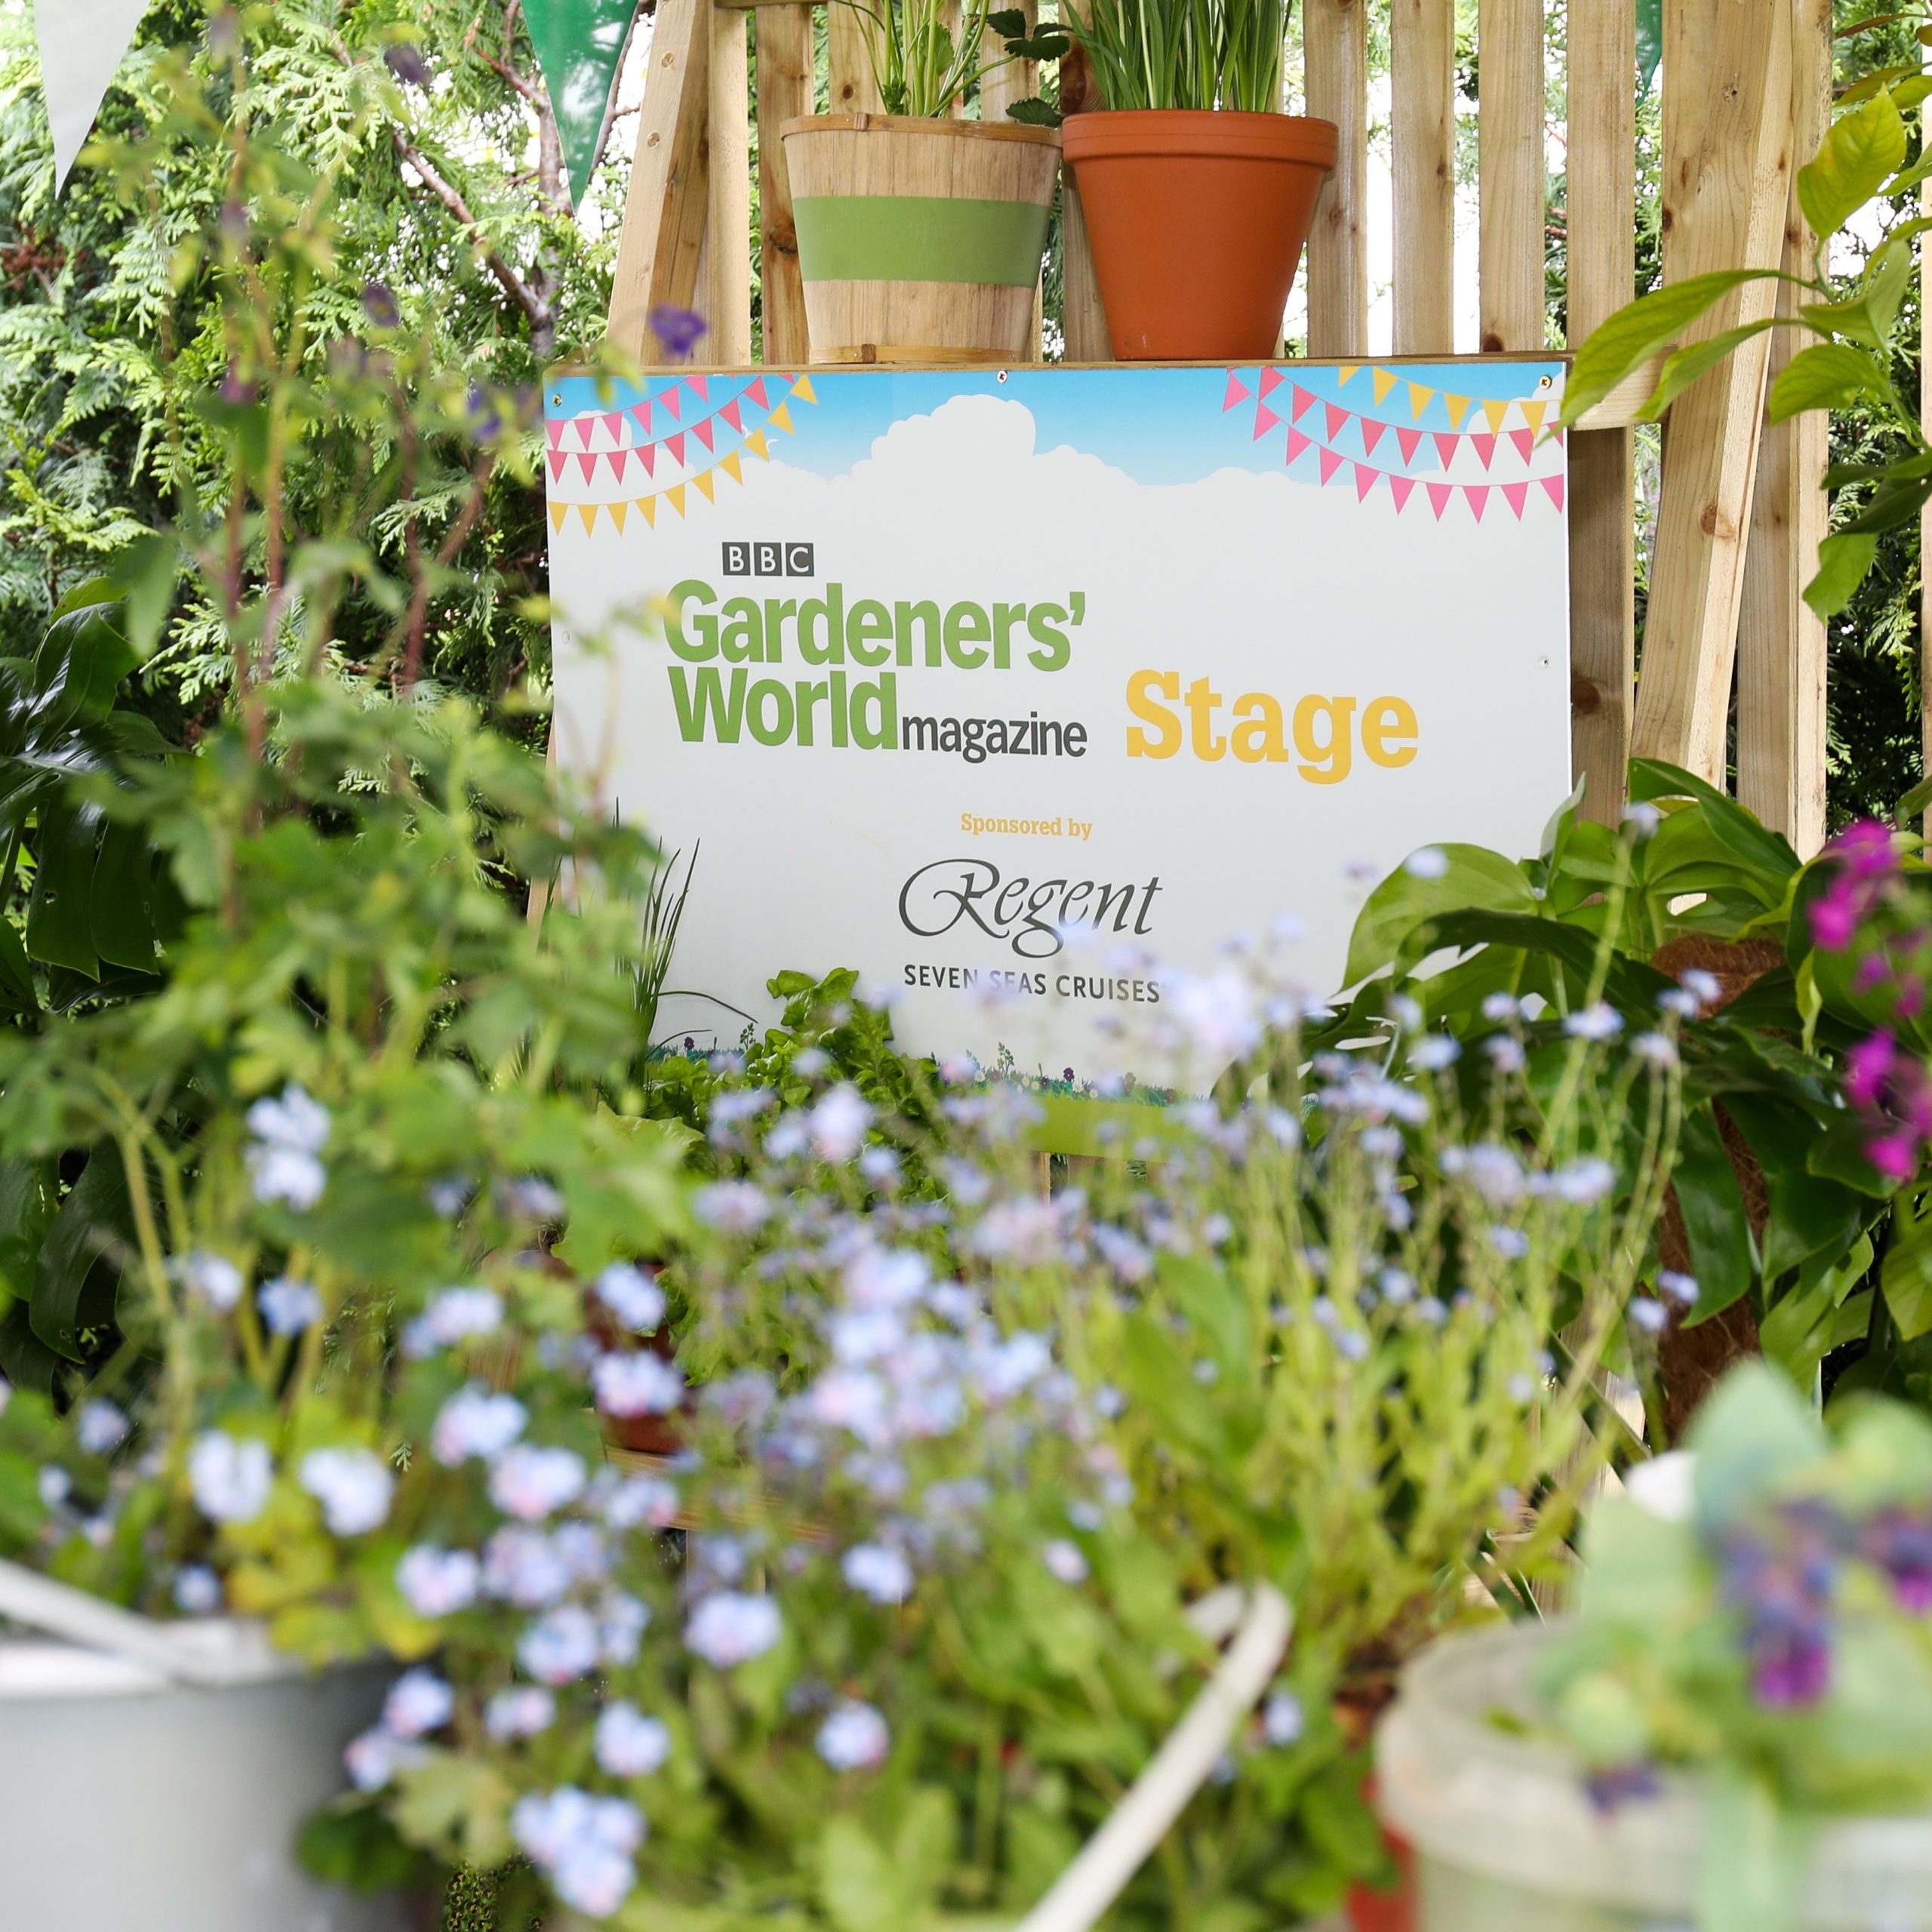 BBC Gardeners’ World Magazine Stage